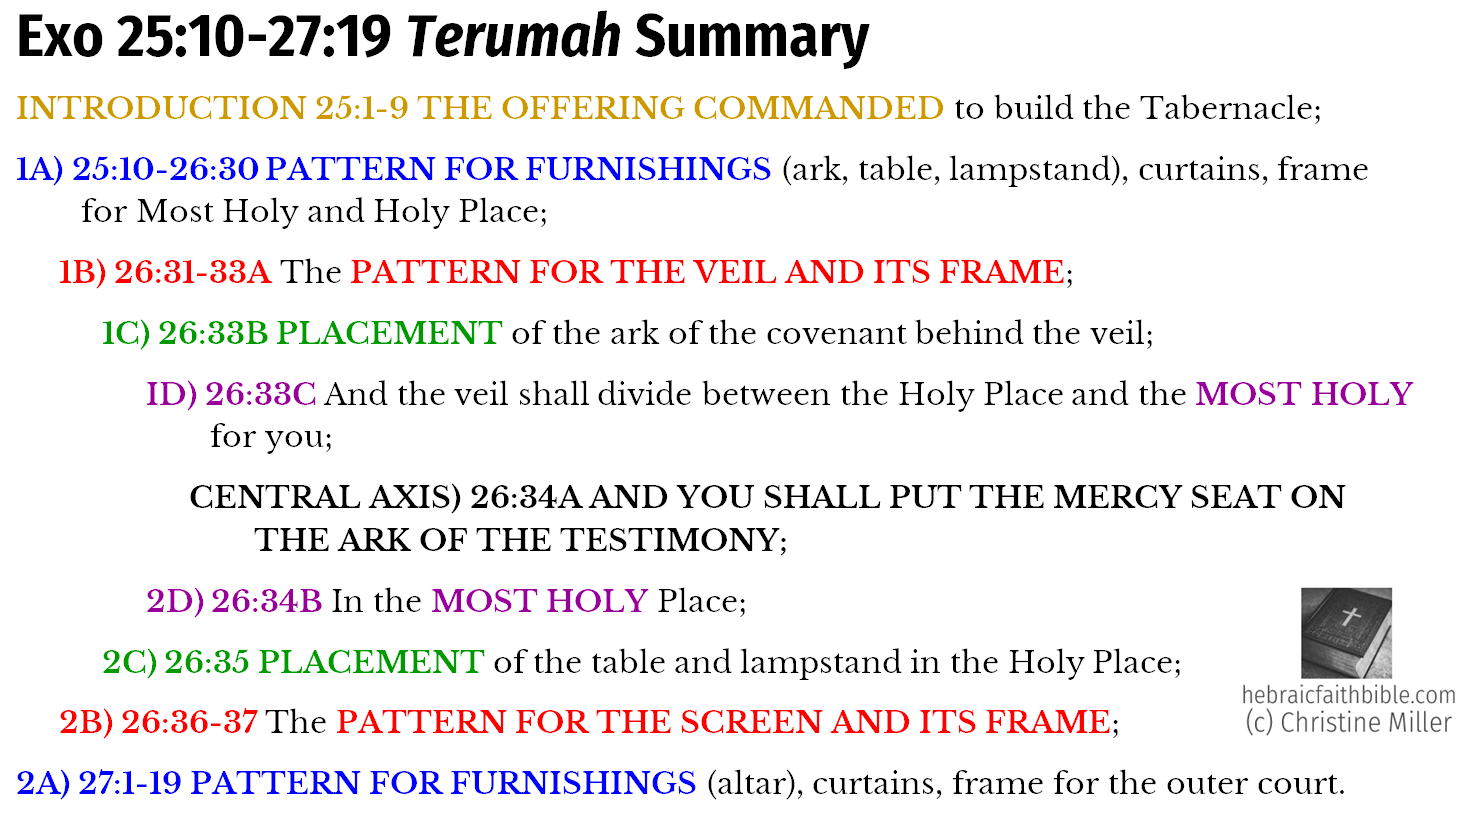 Exo 25:1-27:19 Terumah chiasm summary | hebraicfaithbible.com 